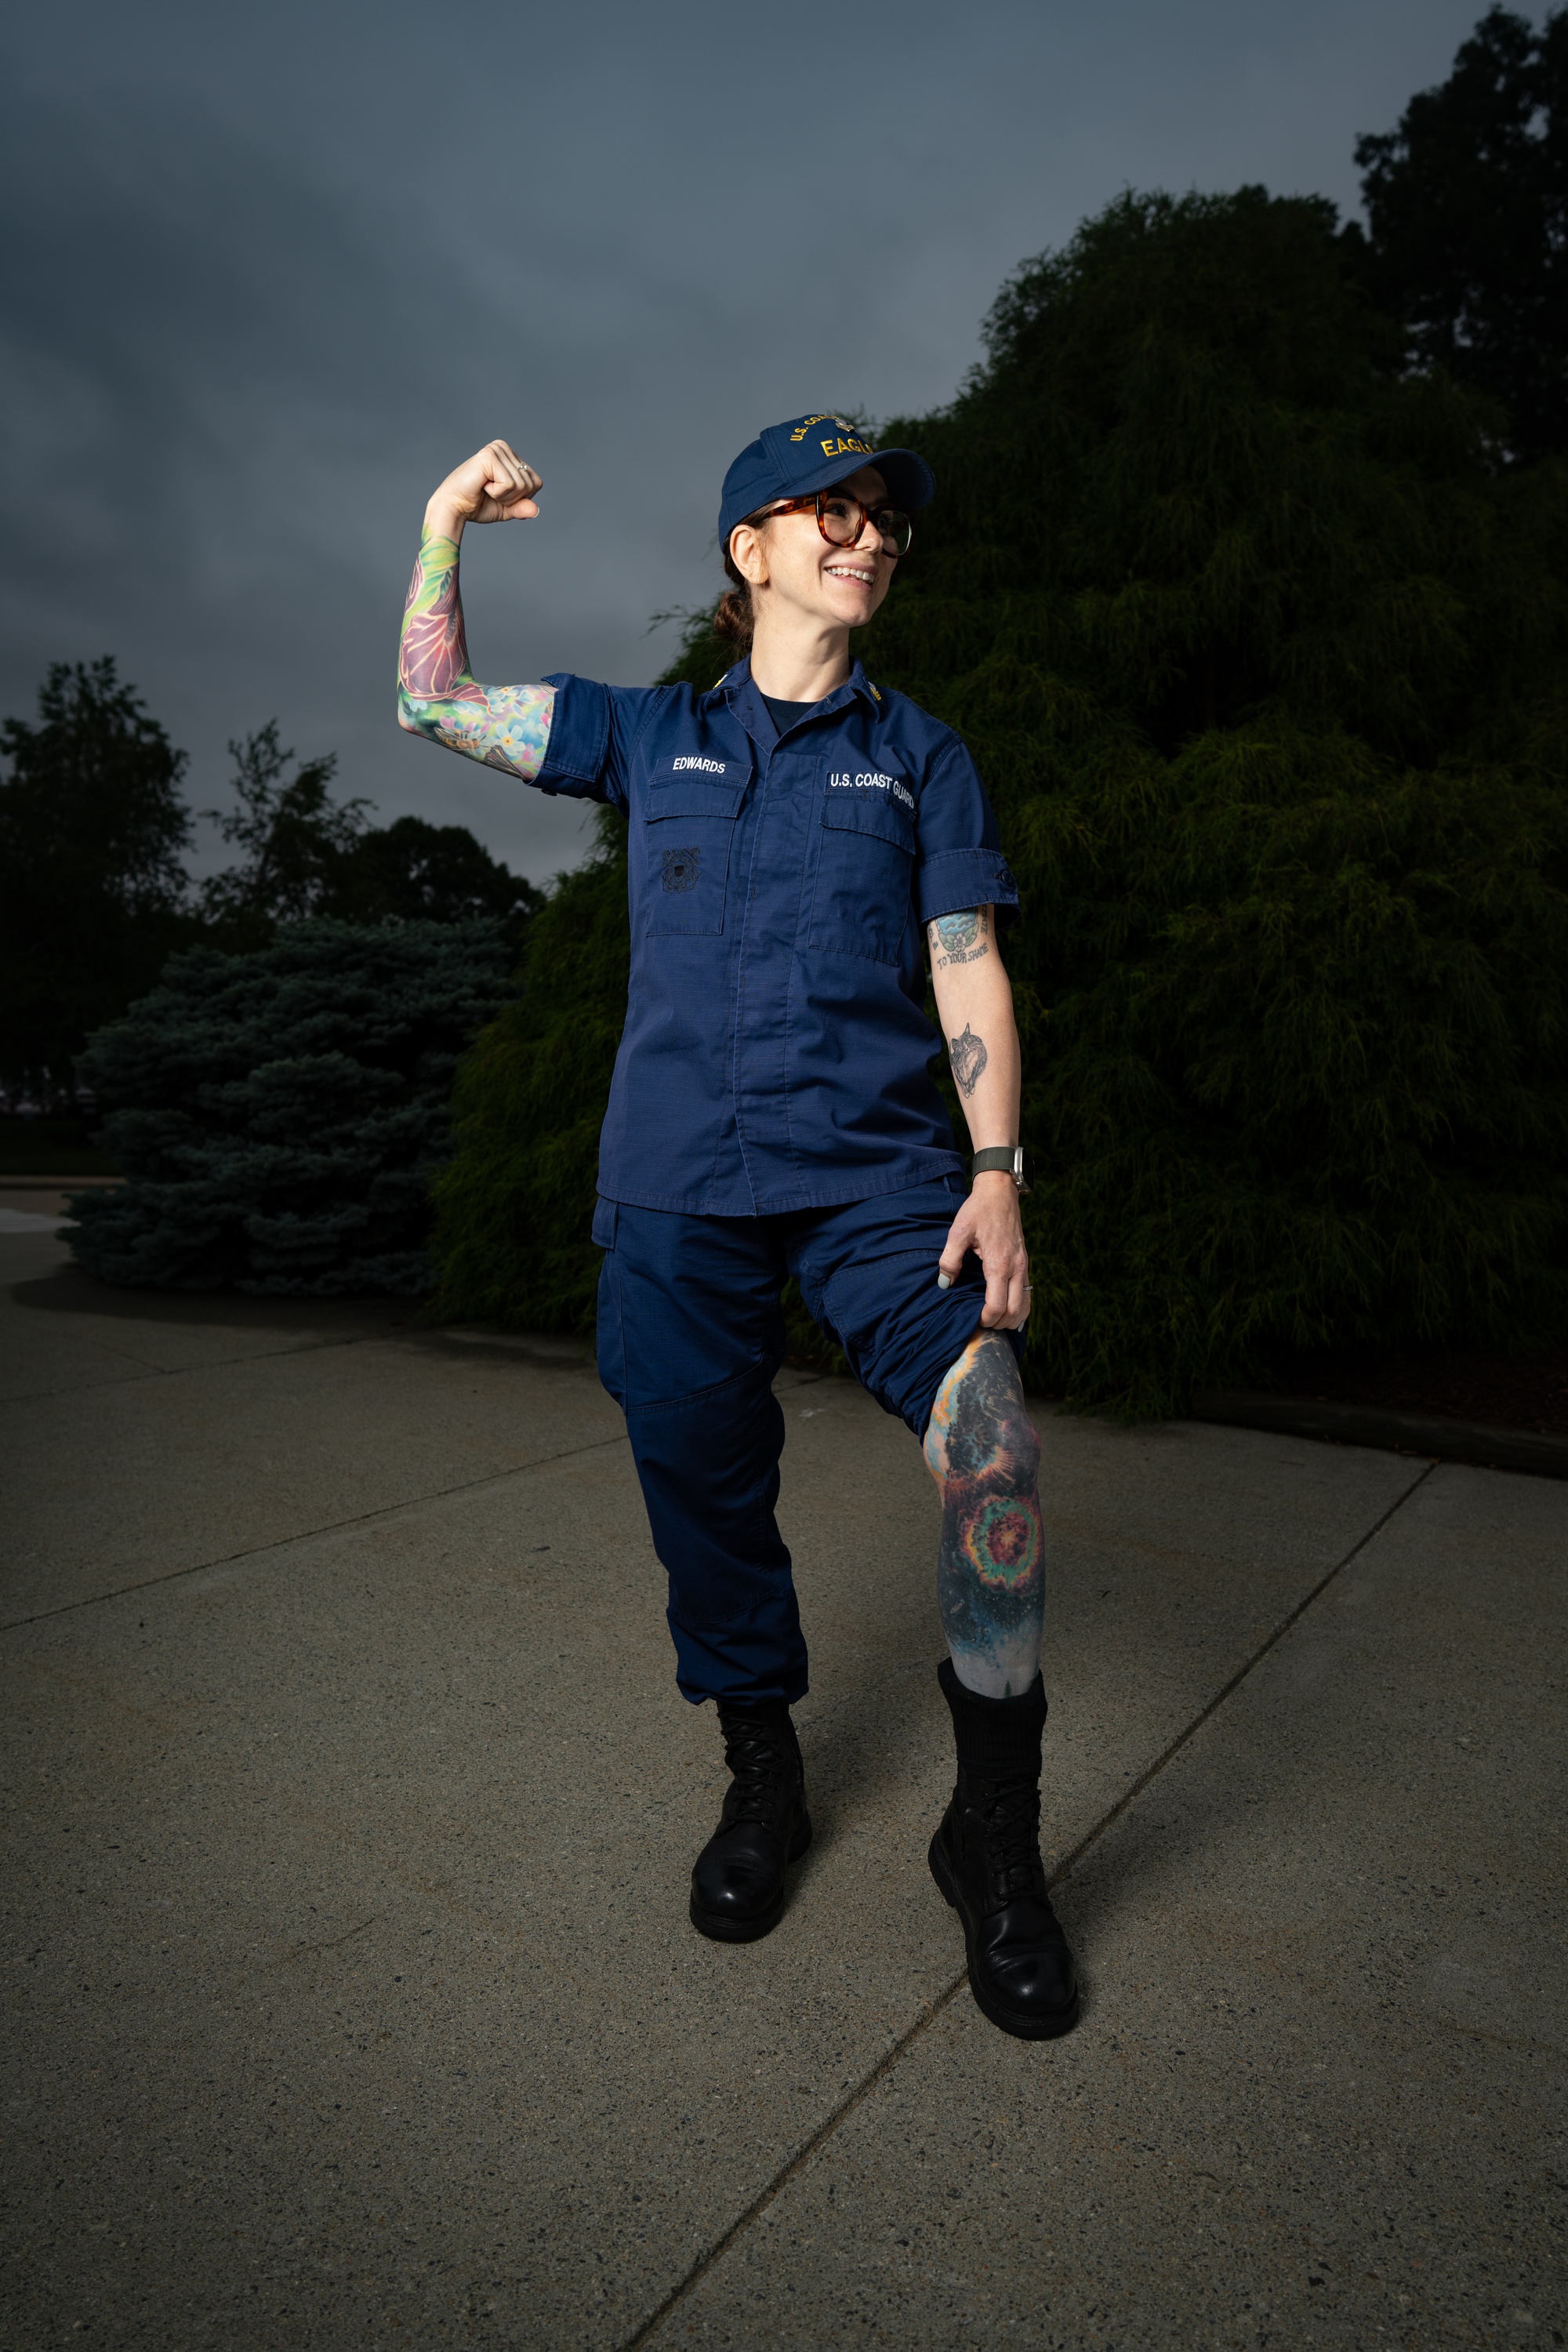 DVIDS - Images - Coast Guard Academy celebrates National Tattoo Day [Image  2 of 3]